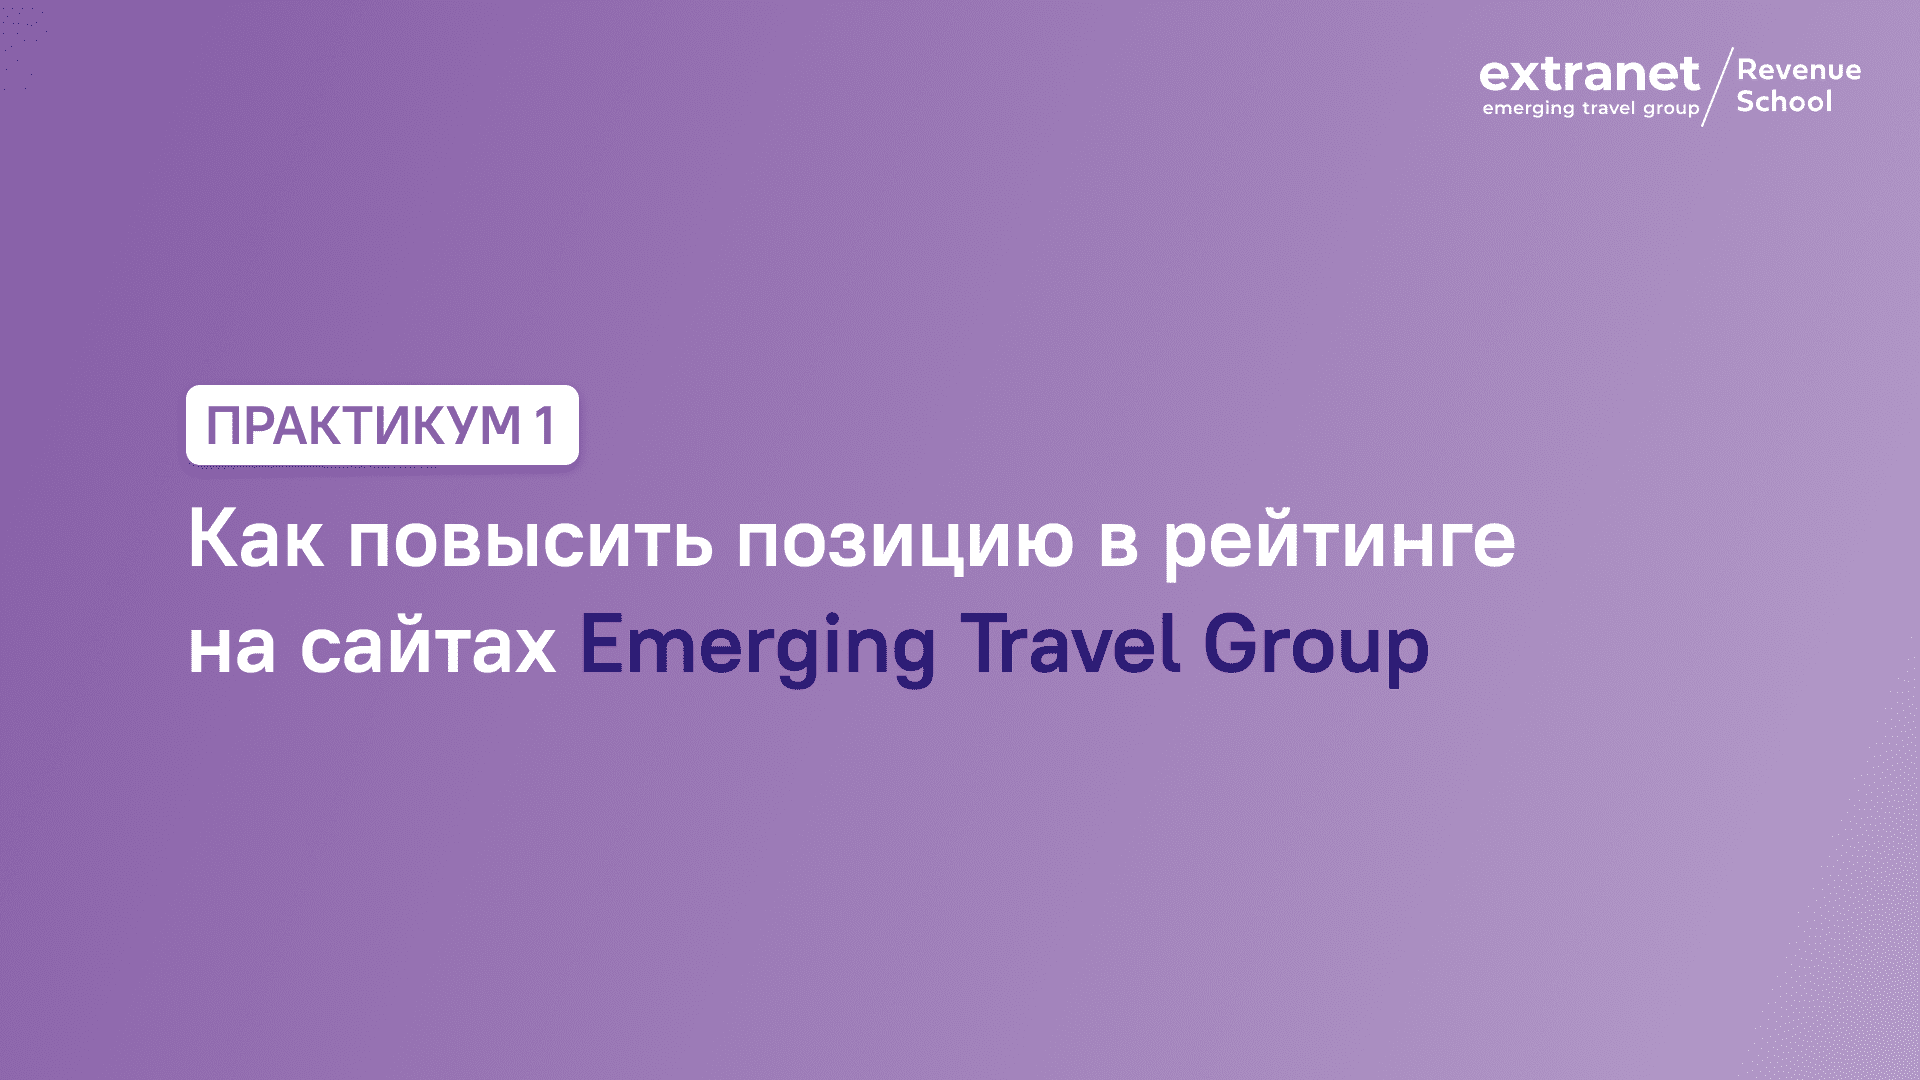 Extranet emerging Travel. Emerging Travel Group. Щелково Емерджинг Тревел. Emerging Travel Group pechat шьящ. Emerging travel